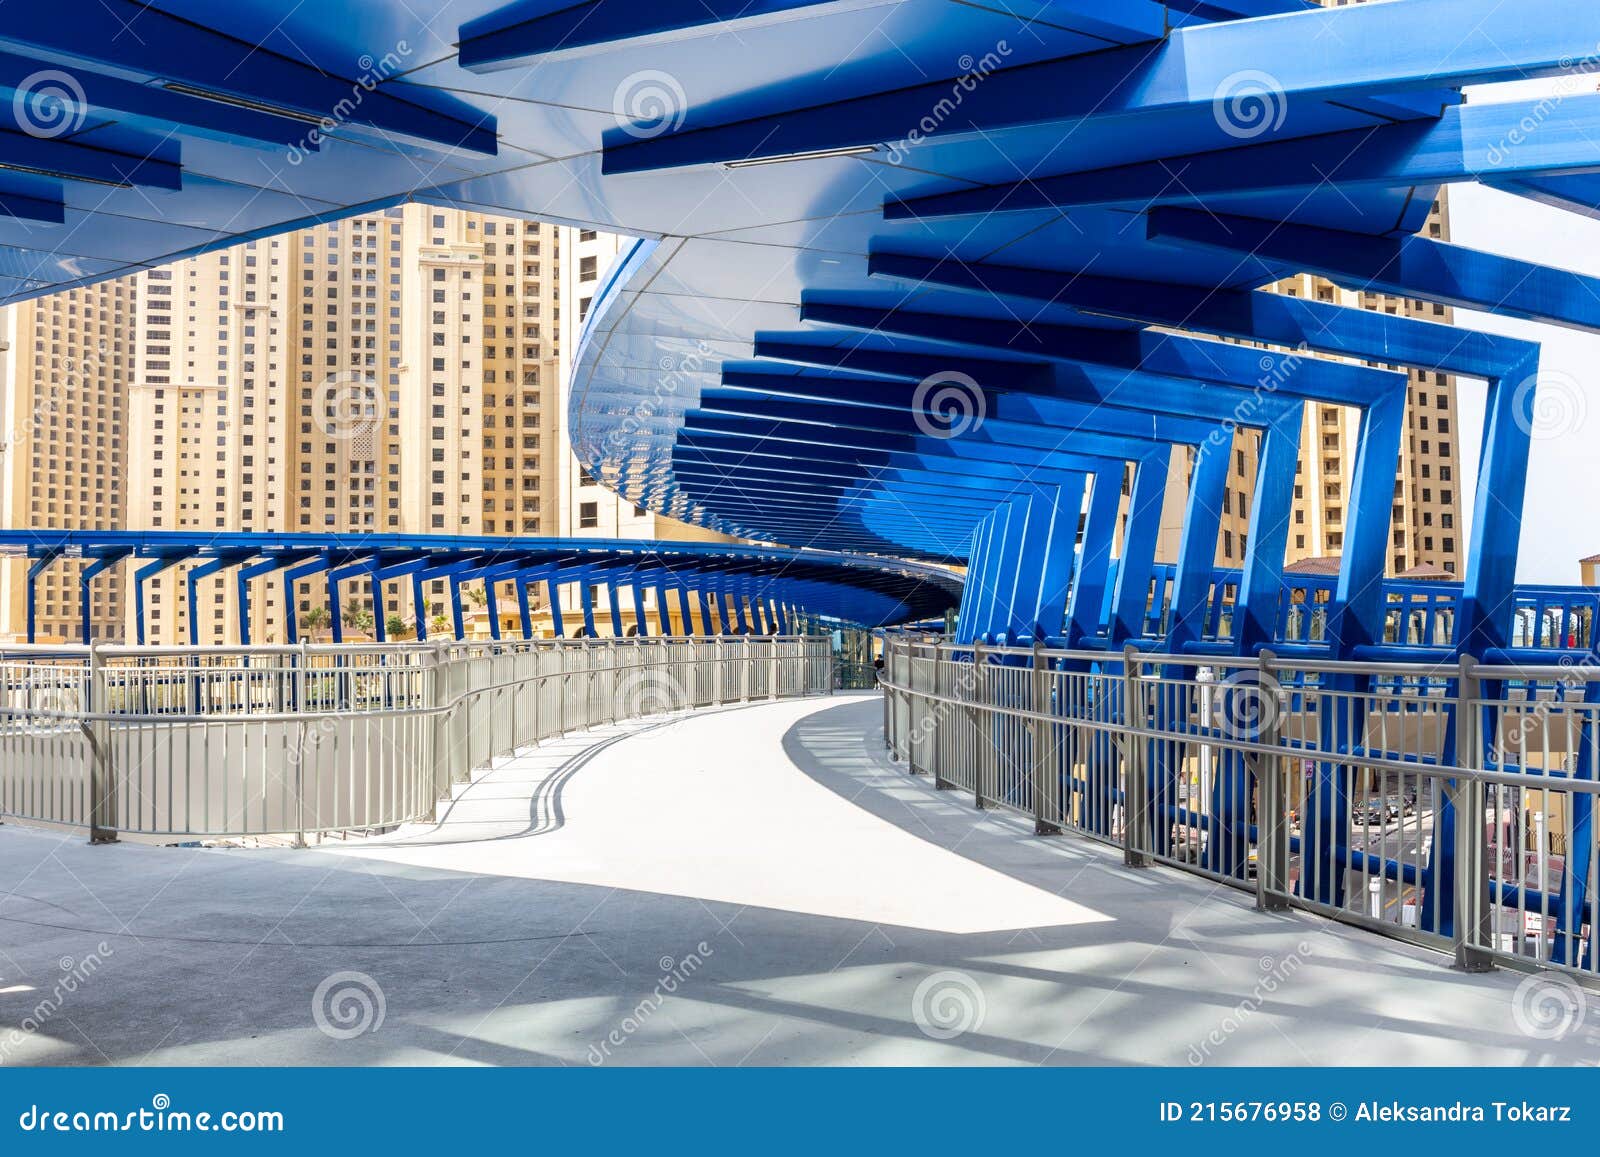 https://thumbs.dreamstime.com/z/dubai-uae-marina-pedestrian-bridge-footbridge-intersection-king-abdullah-bin-abdulaziz-al-saud-street-al-gharbi-215676958.jpg